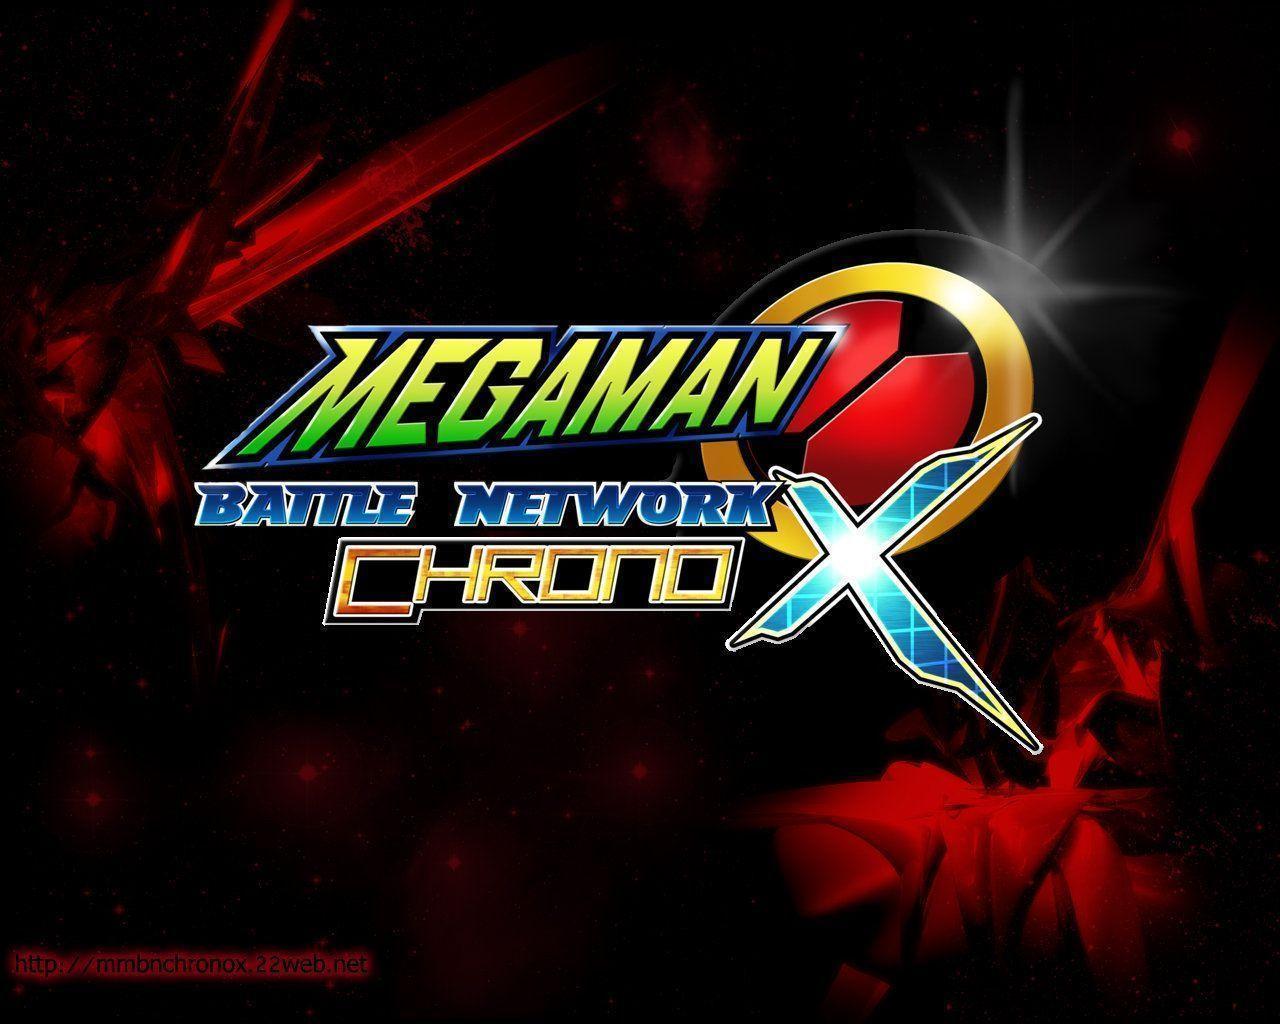 MegaMan Battle Network: Chrono X